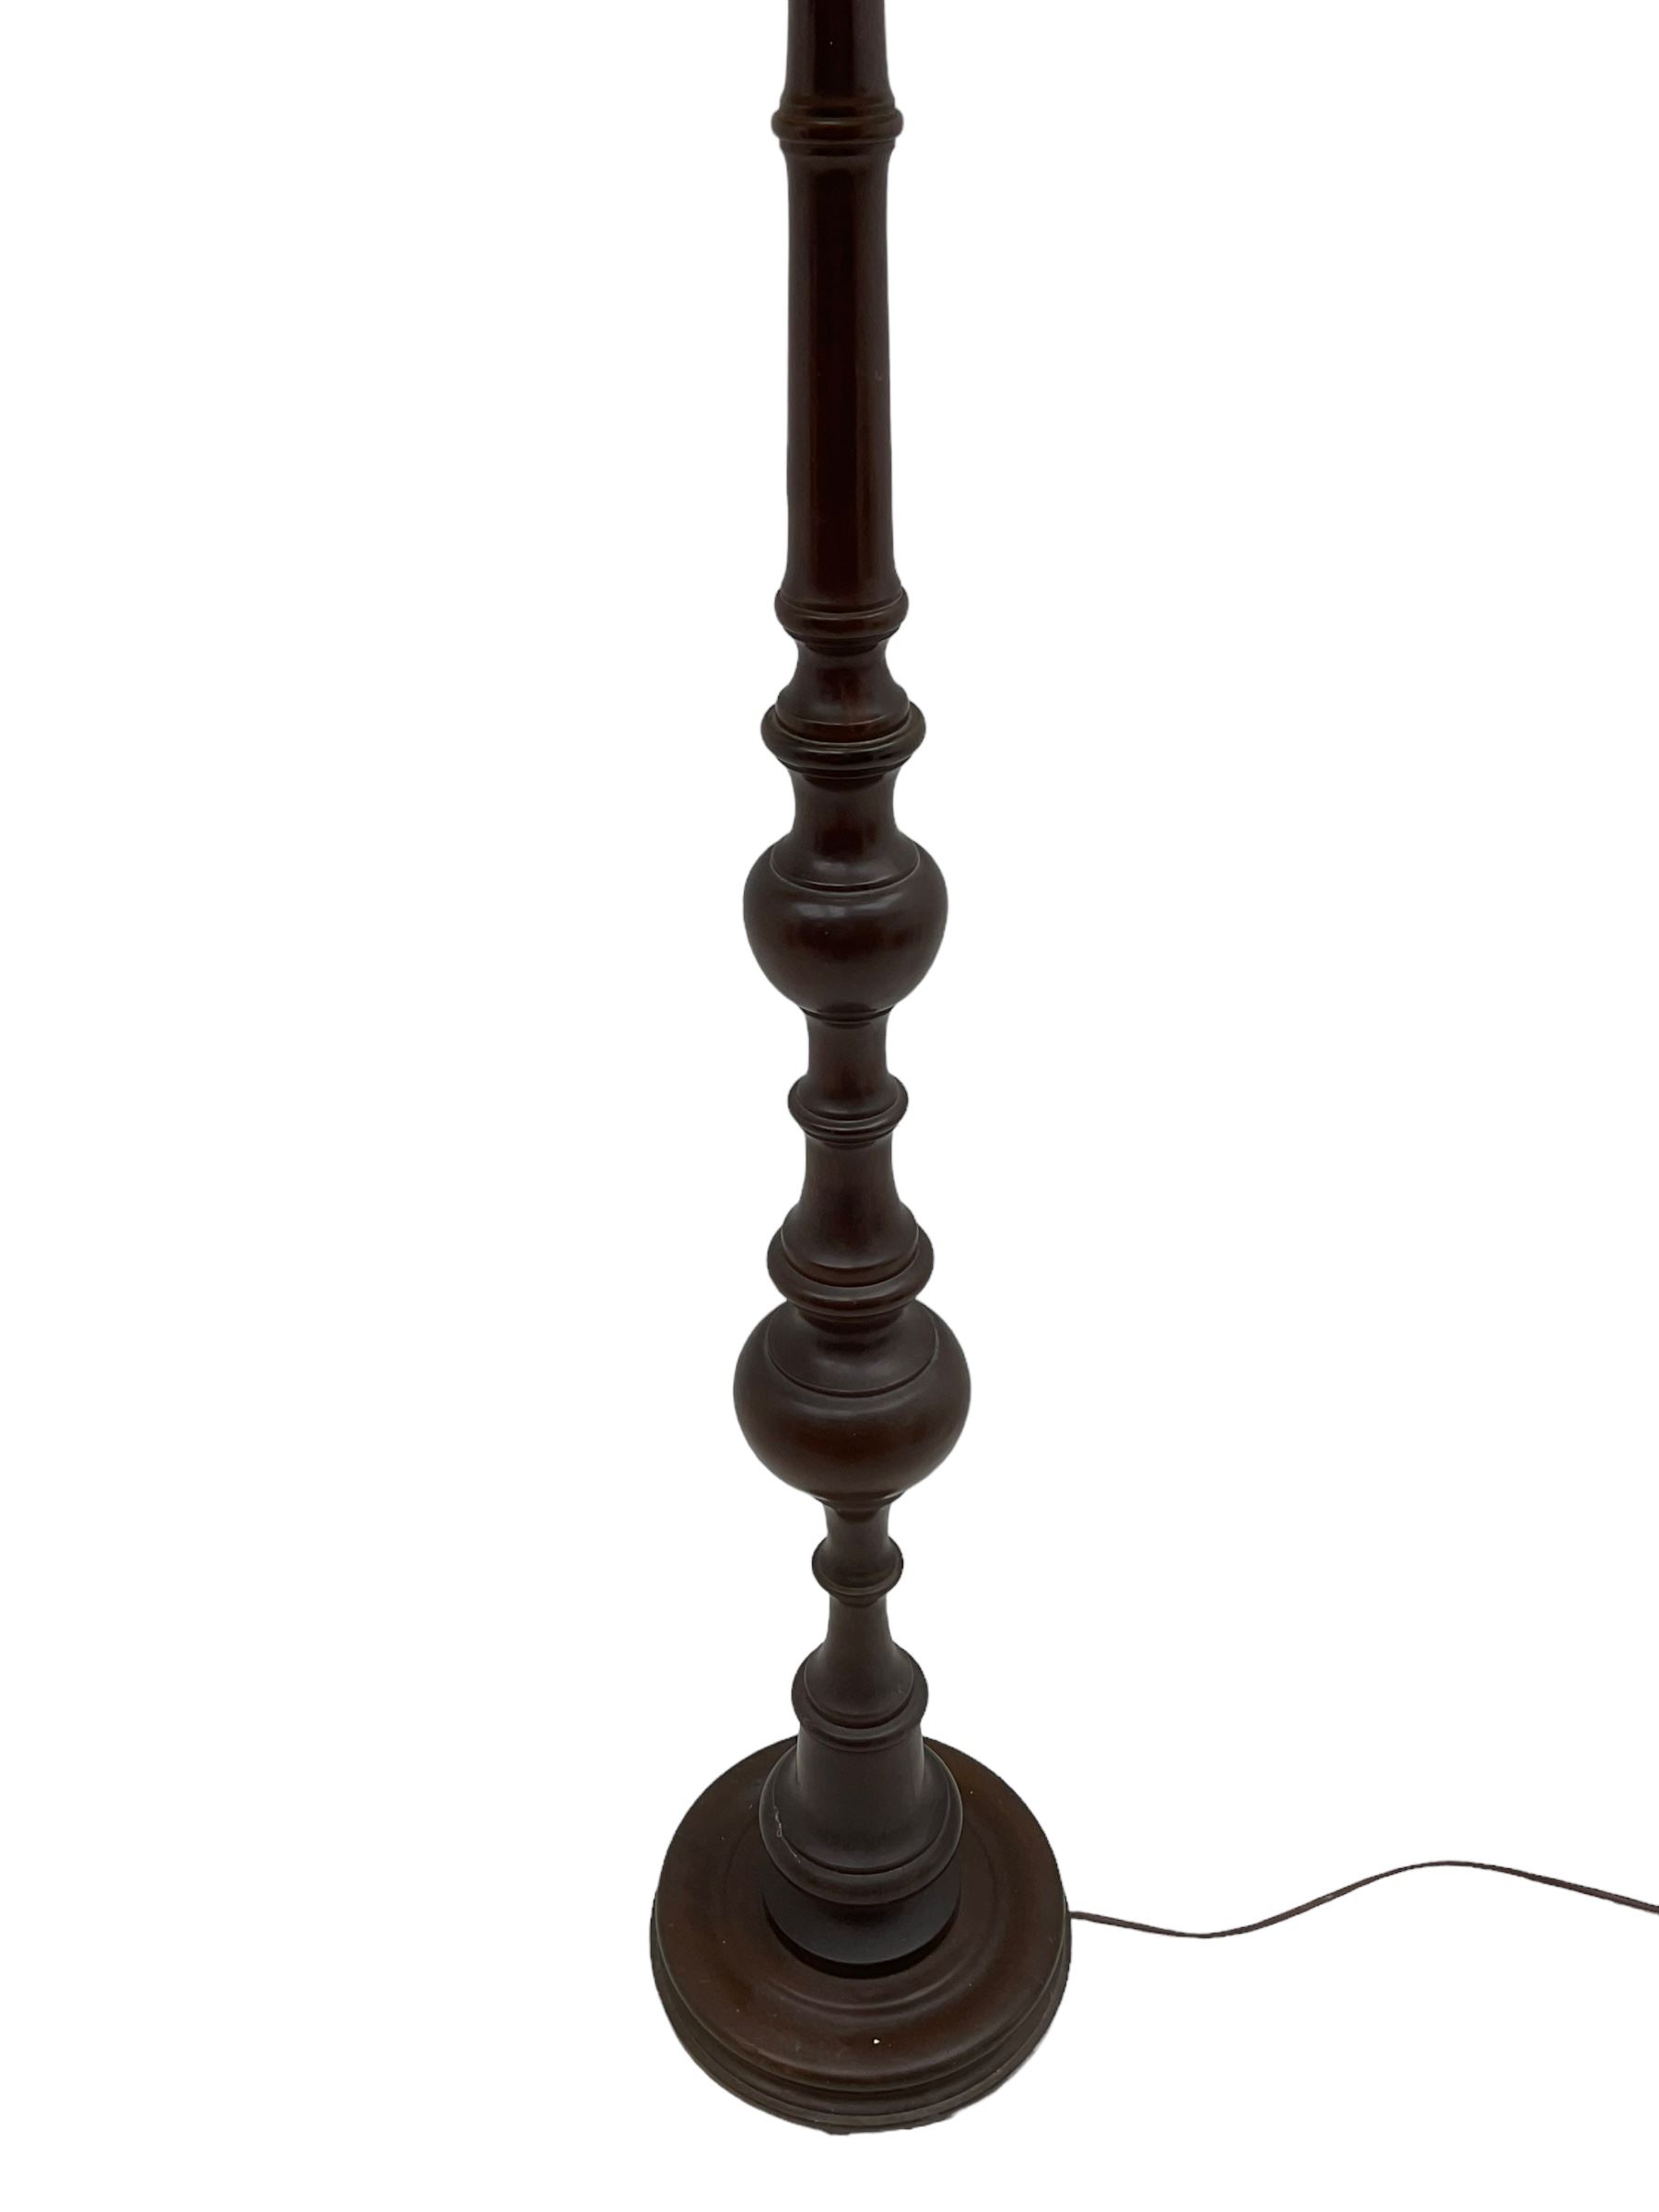 20th century walnut standard lamp - Image 4 of 4